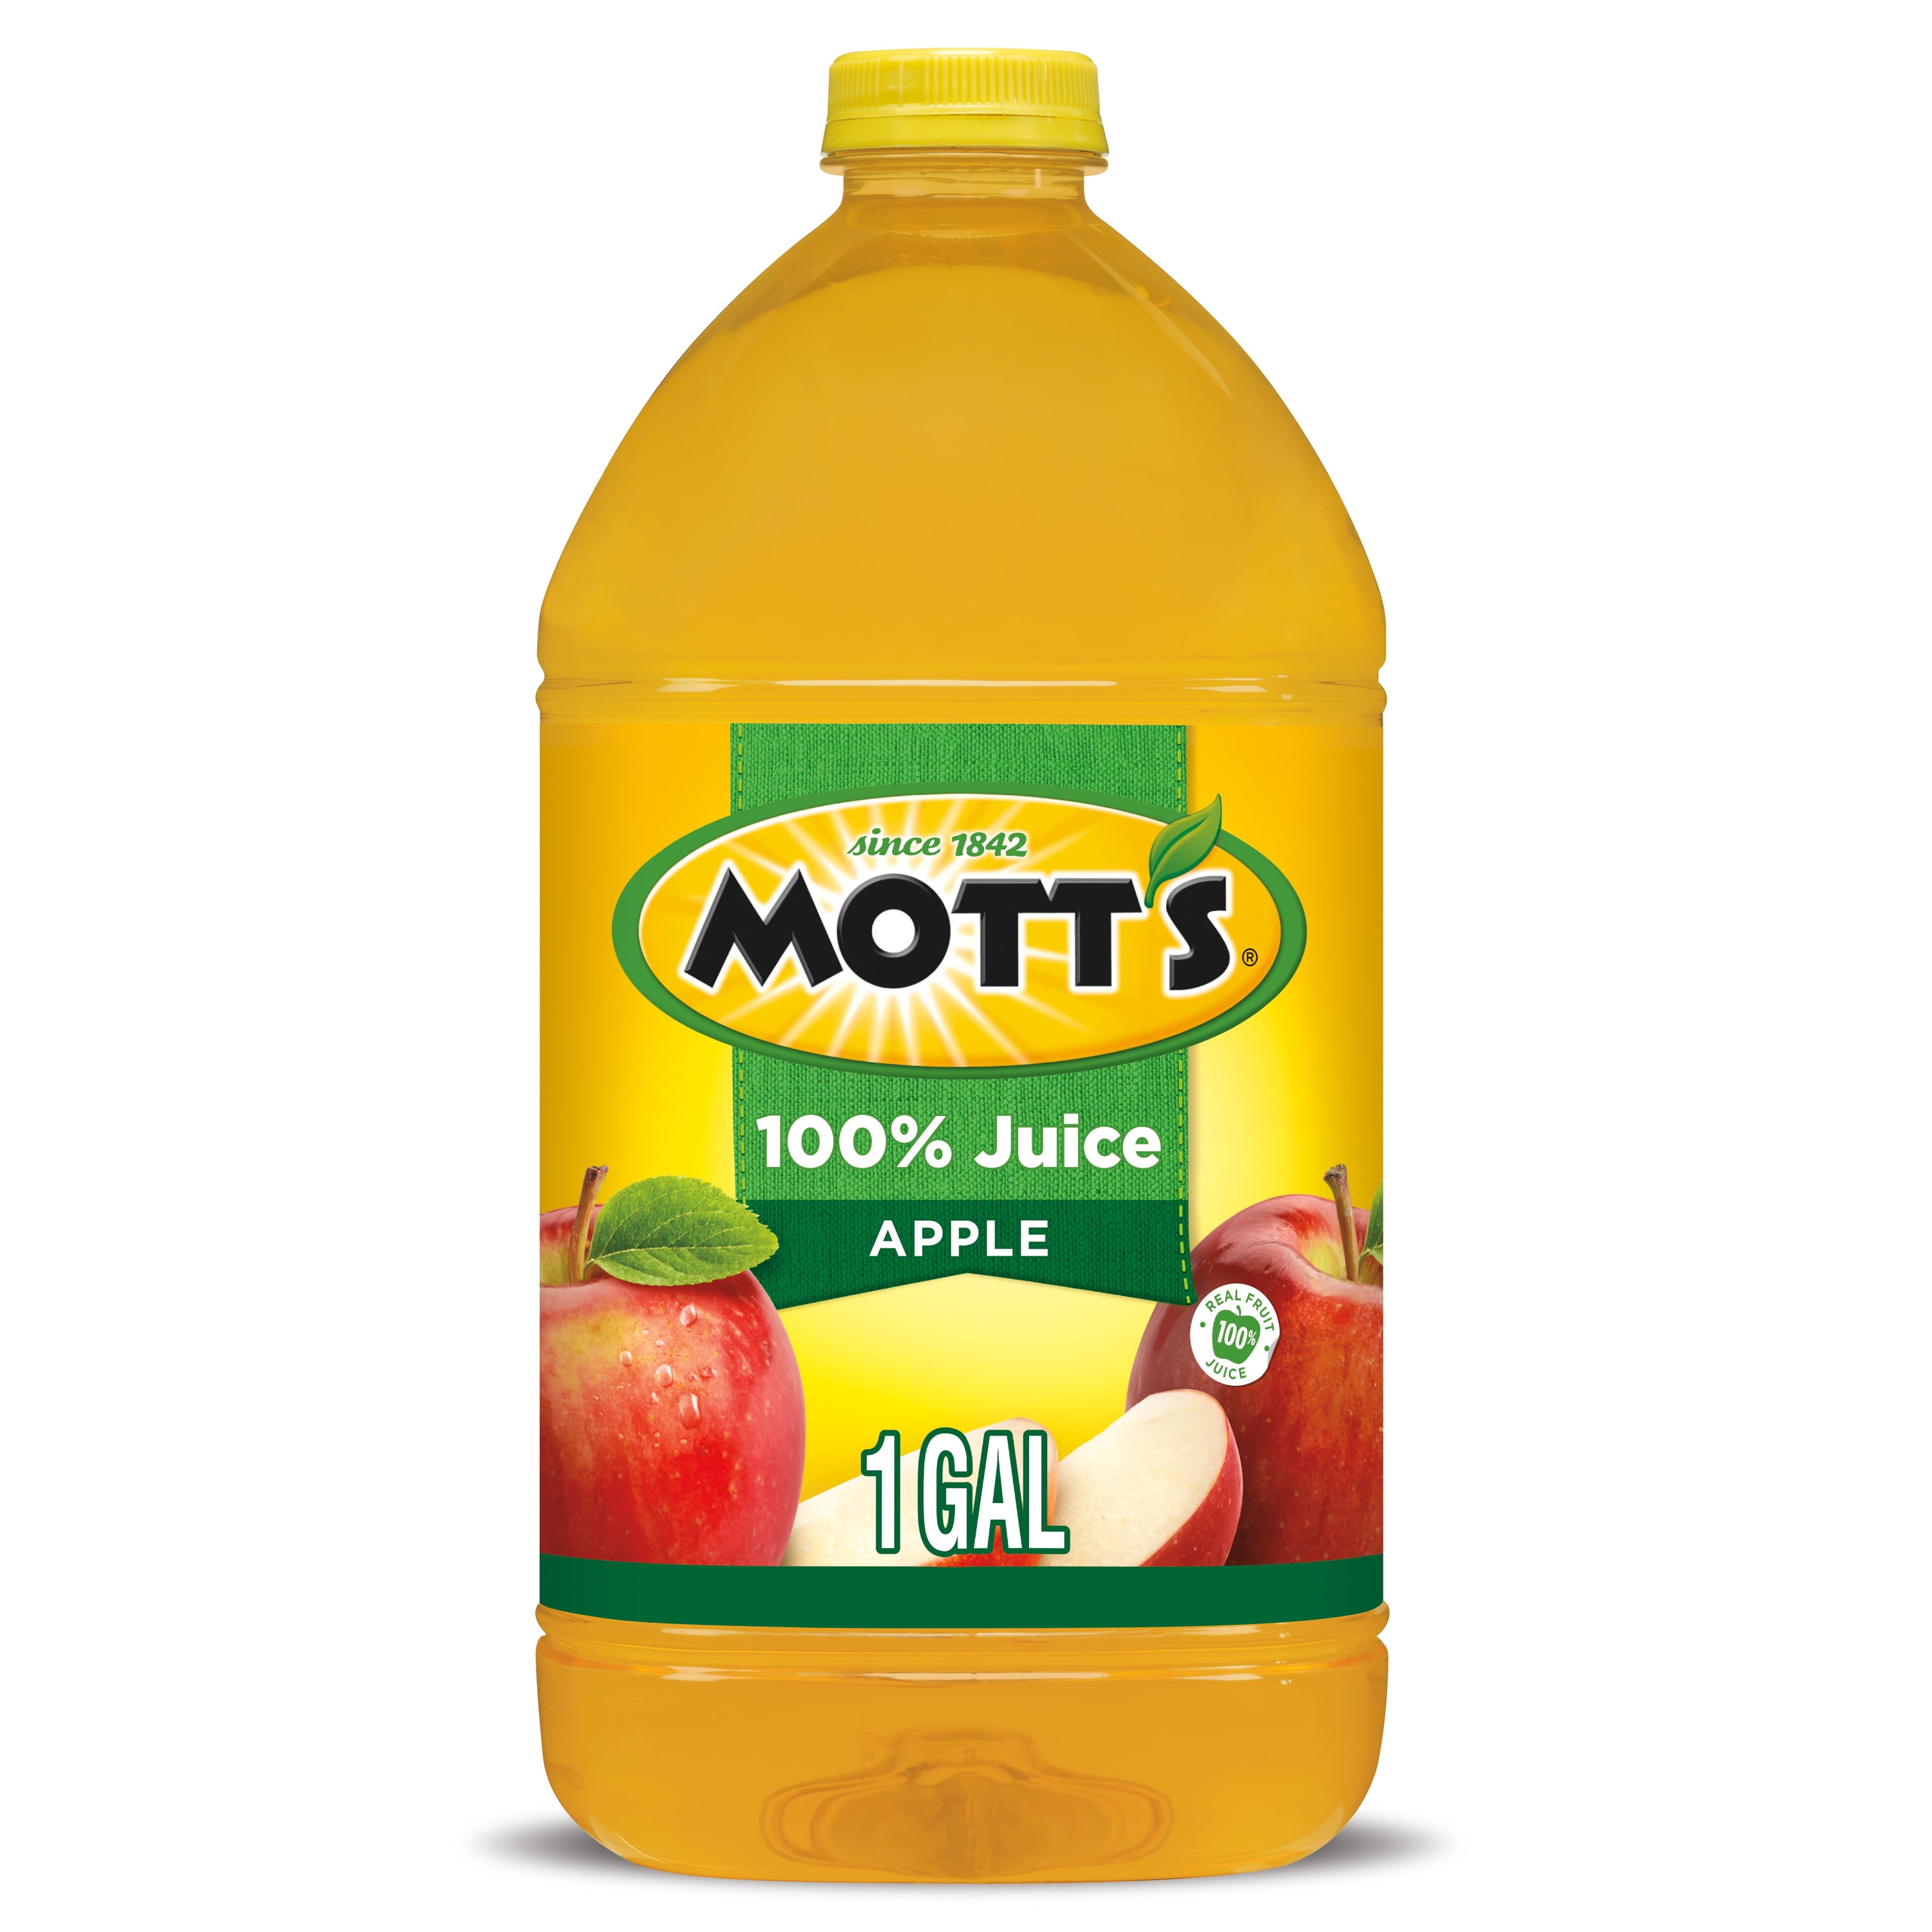 Mott's 100% Original Apple Juice, 1 gal bottle - Walmart.com - Walmart.com